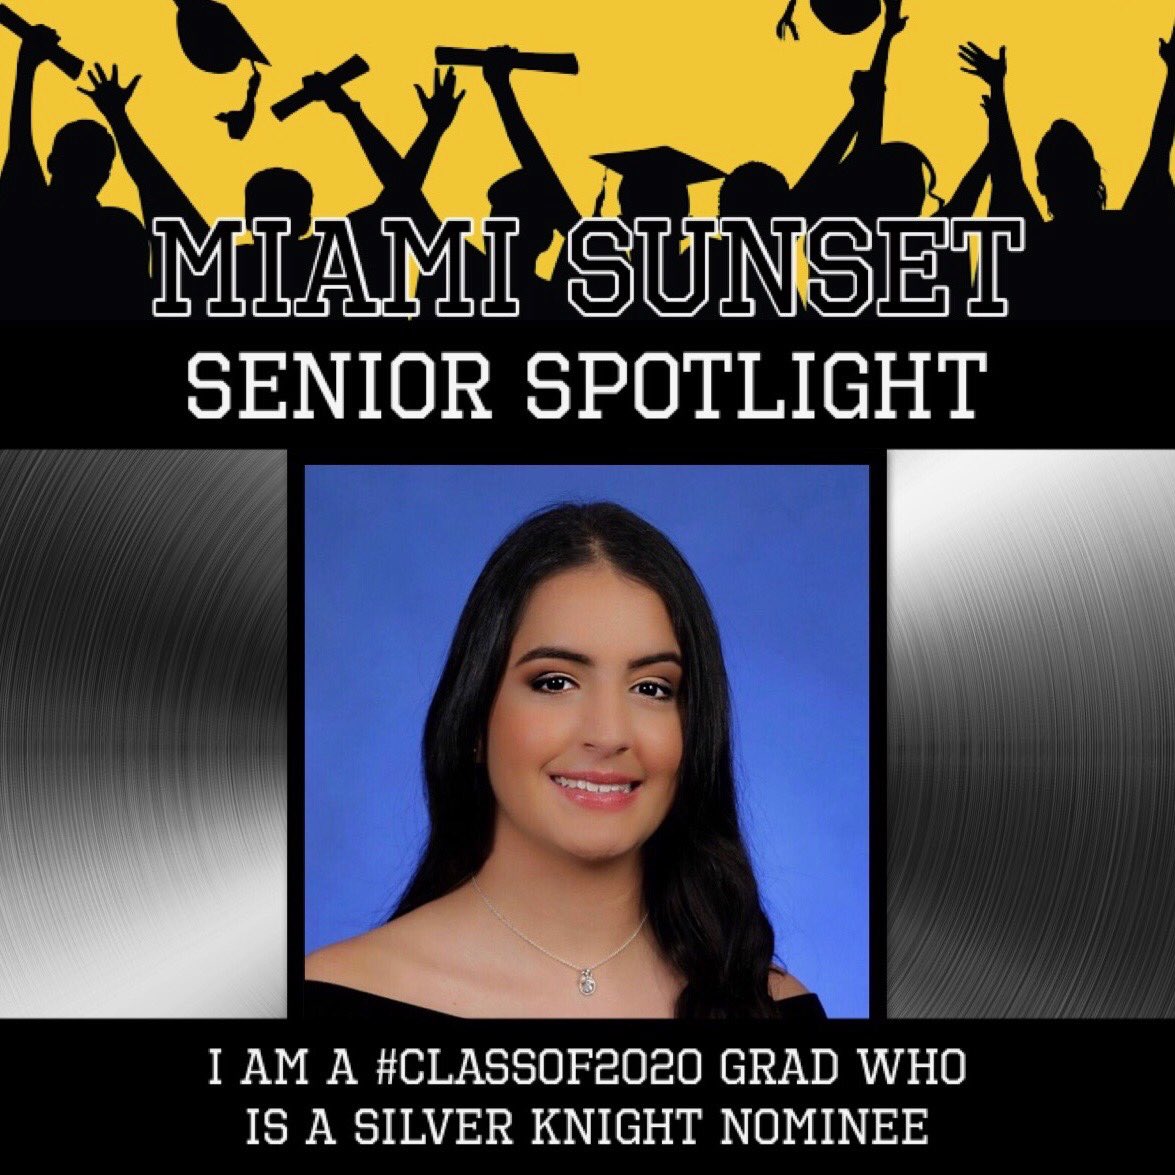 Meet Mariela Mendoza.  She is a Miami Sunset Silver Knight Nominee for the #Classof2020.  You make us proud Mariela! Go Knights! @MDCPSSouth @MiamiSup @MDCPS 

#MDCPSGrad
#Classof2020
#MeetMDCPSGrads
#SeniorSpotlight